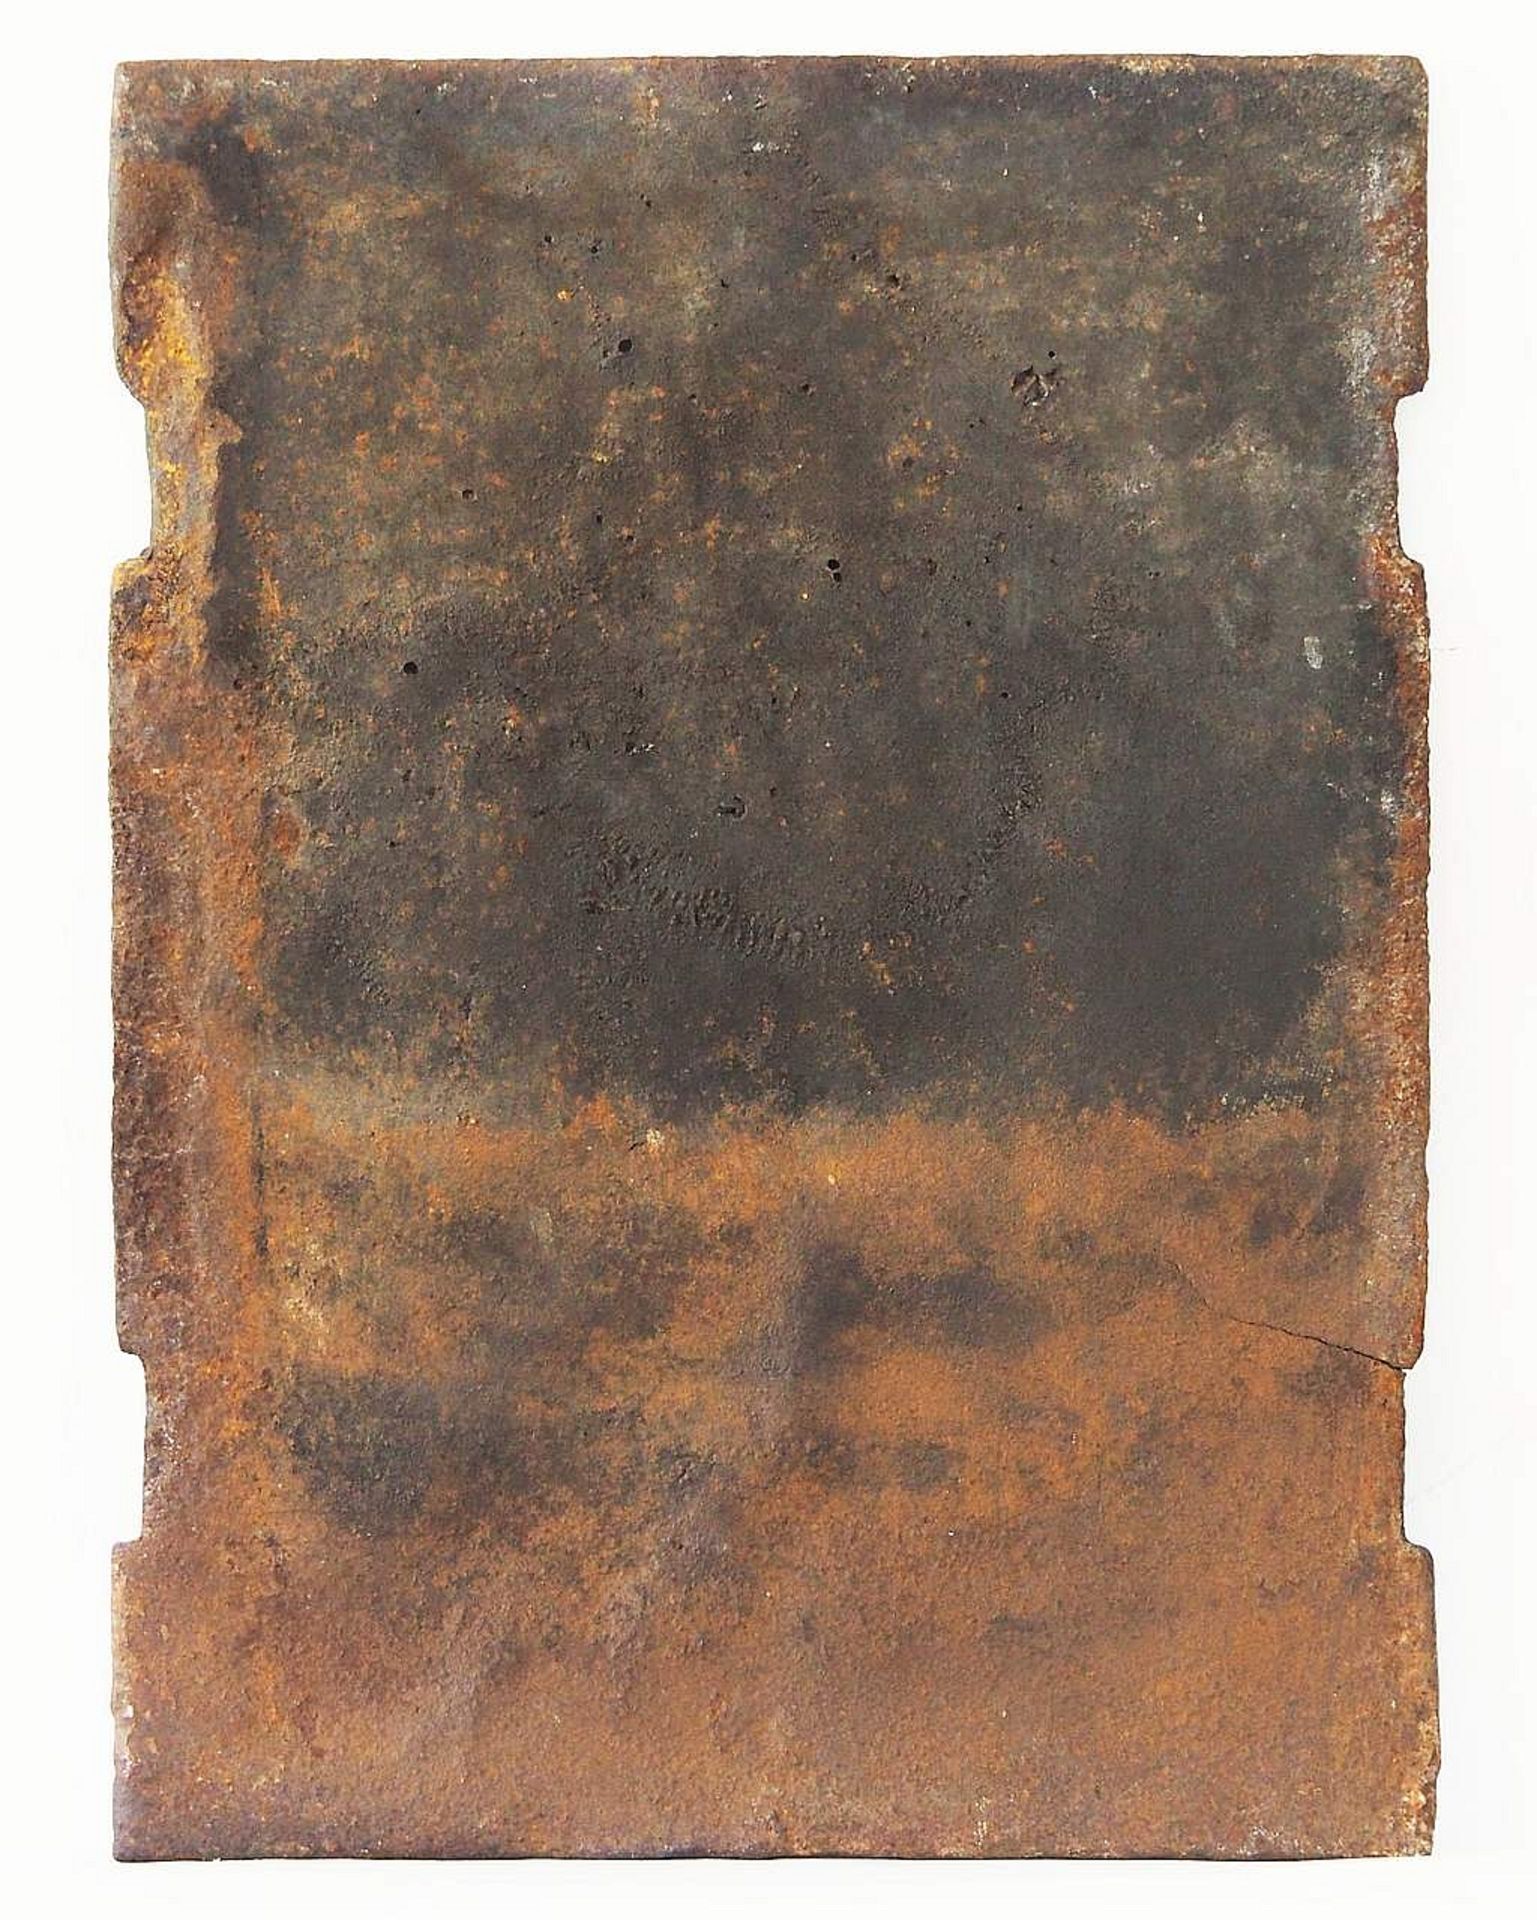 Gusseiserne Kaminplatte, wohl Anfang 19. Jahrhundert.  - Bild 5 aus 5